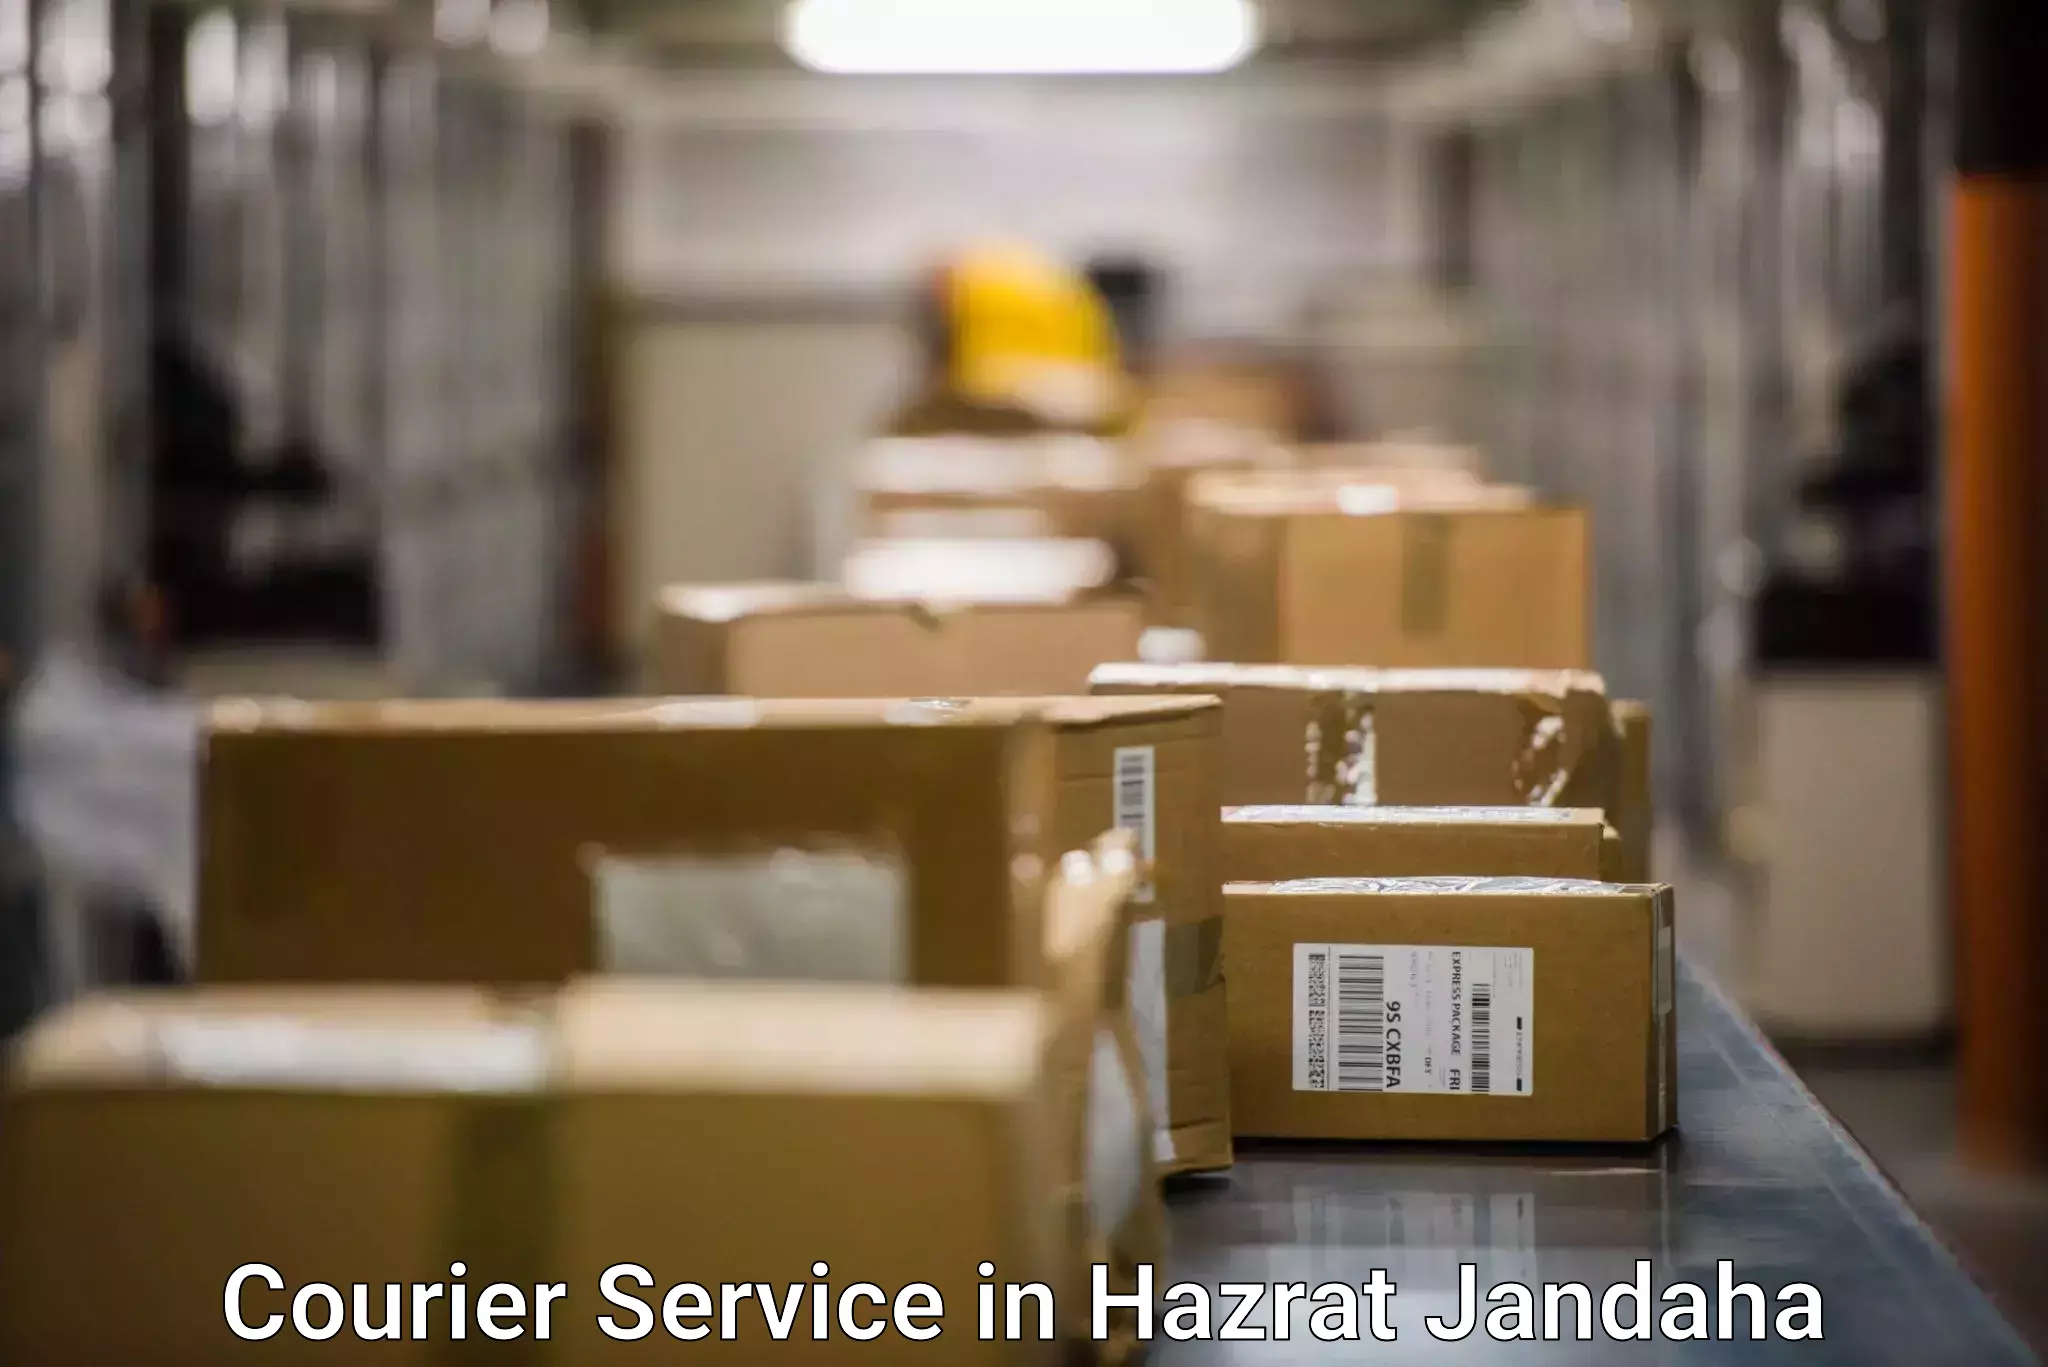 Tech-enabled shipping in Hazrat Jandaha